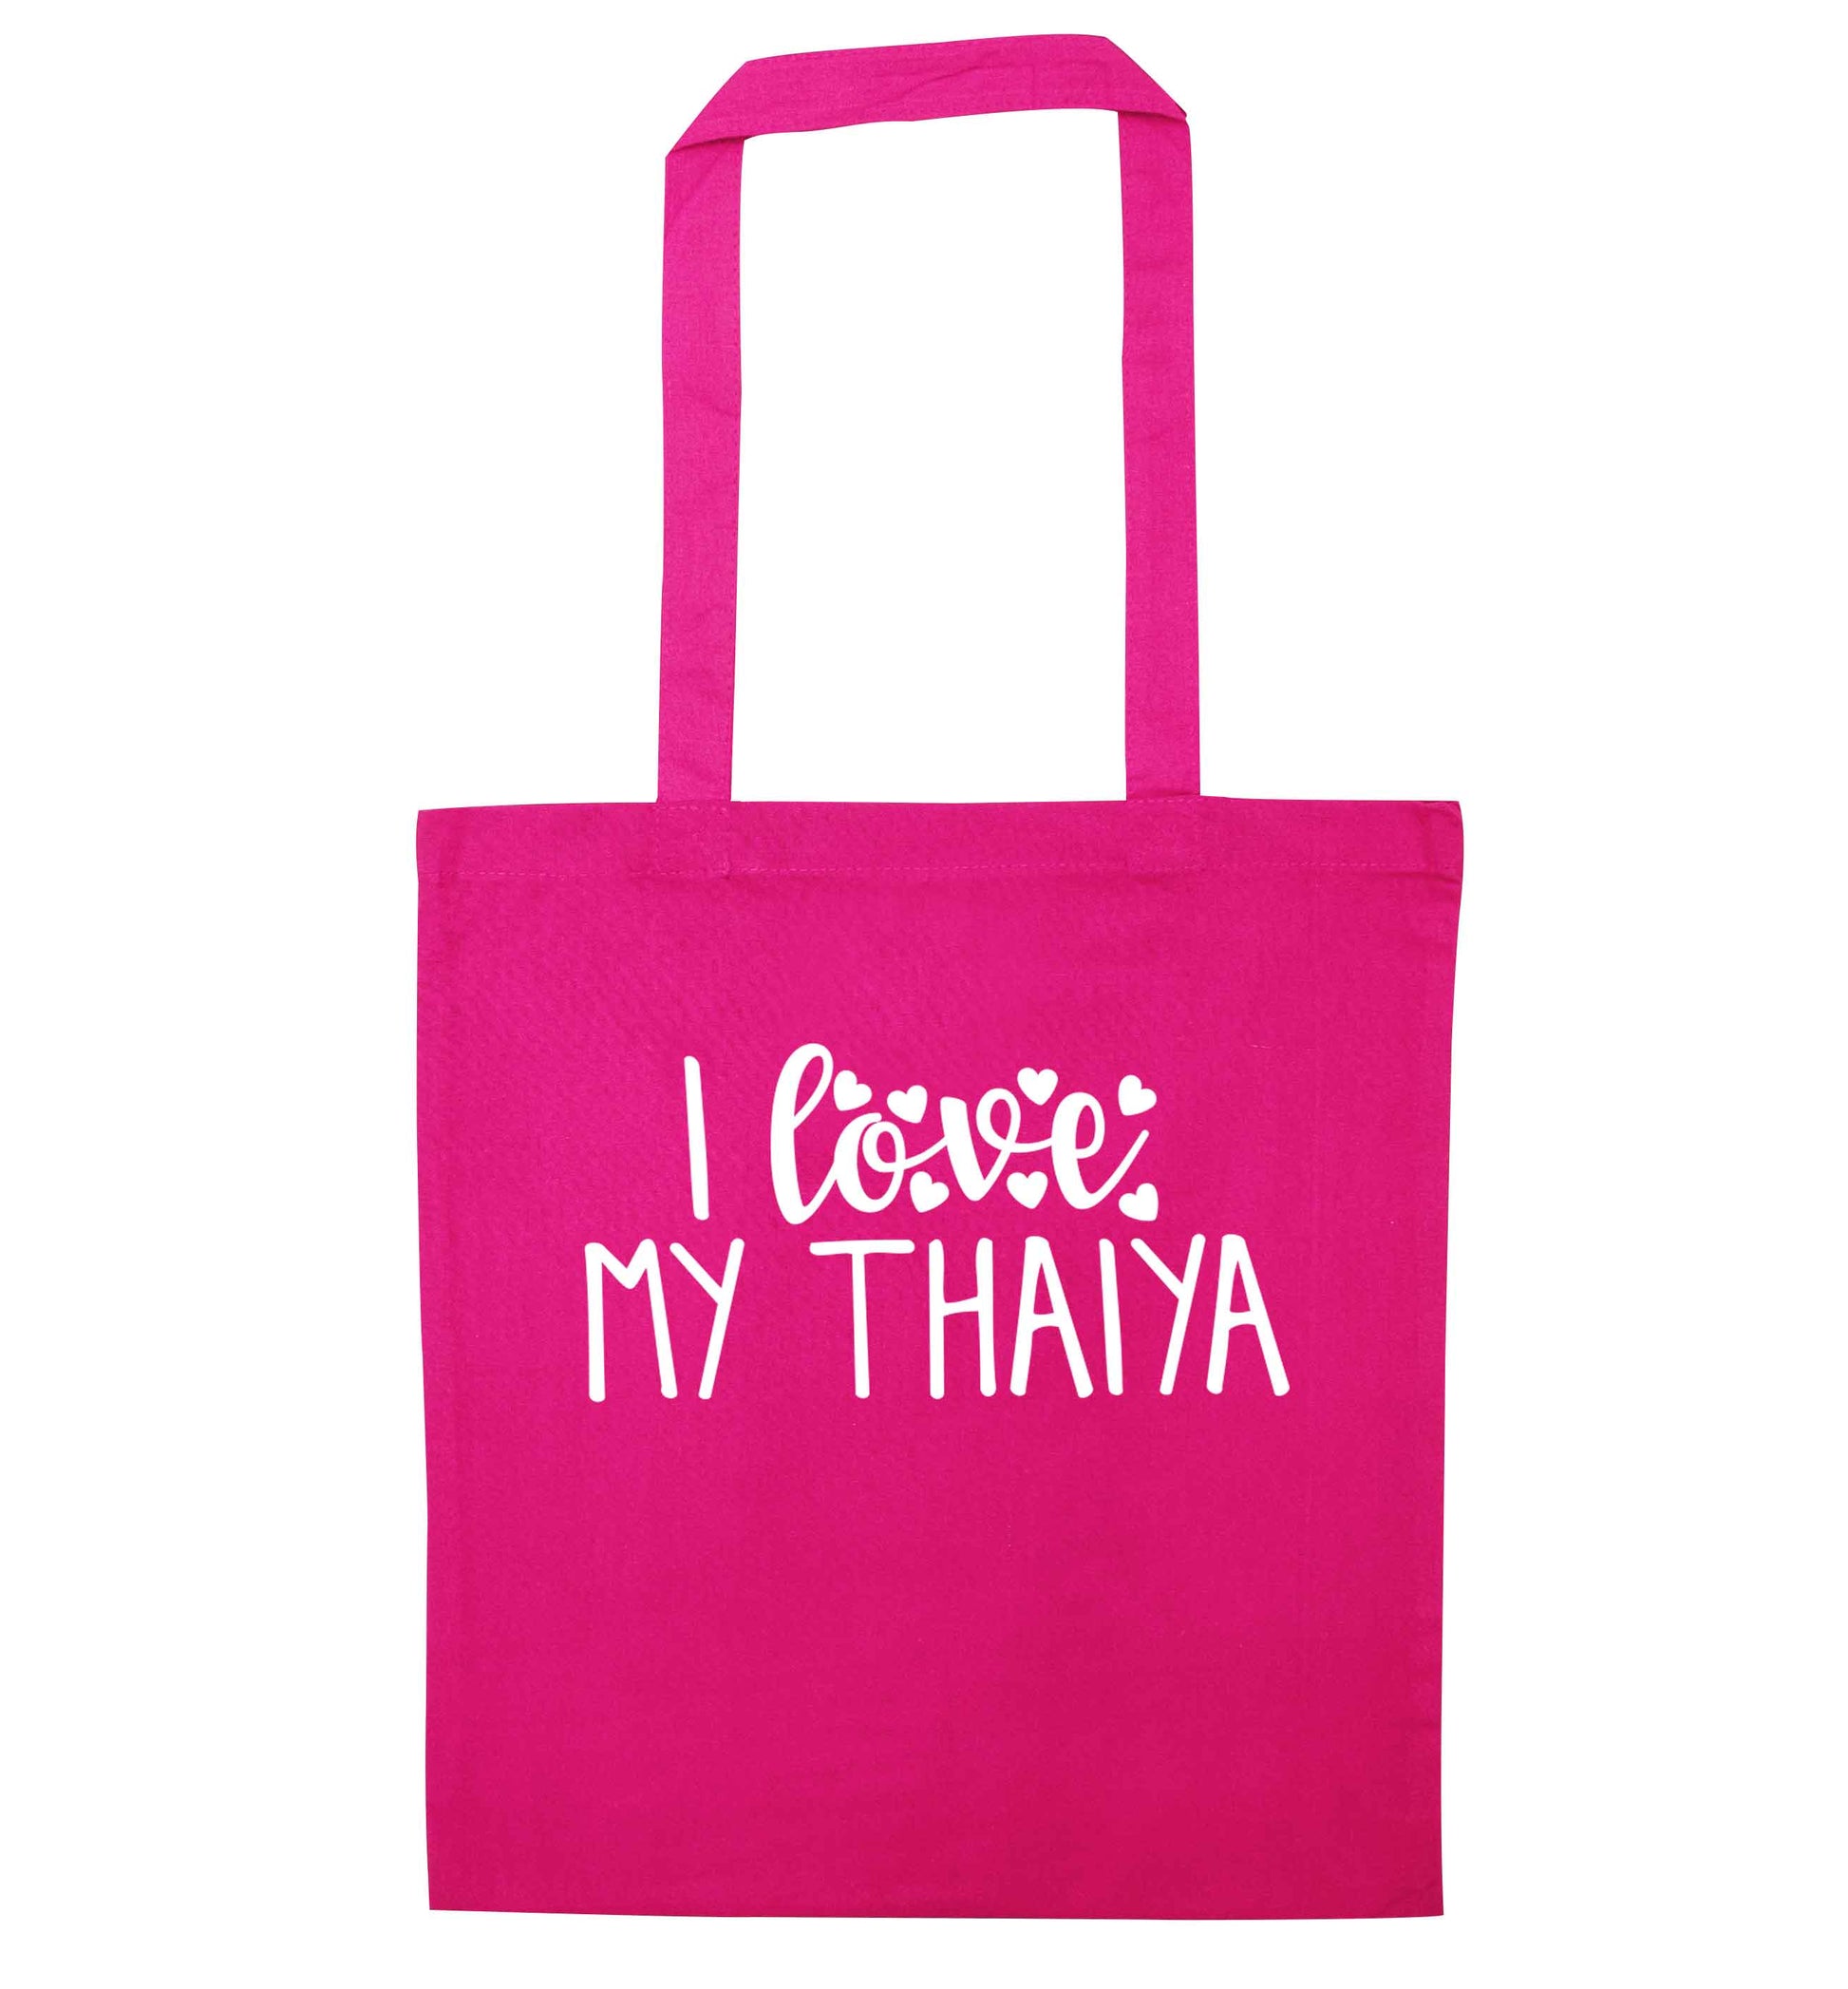 I love my thaiya pink tote bag